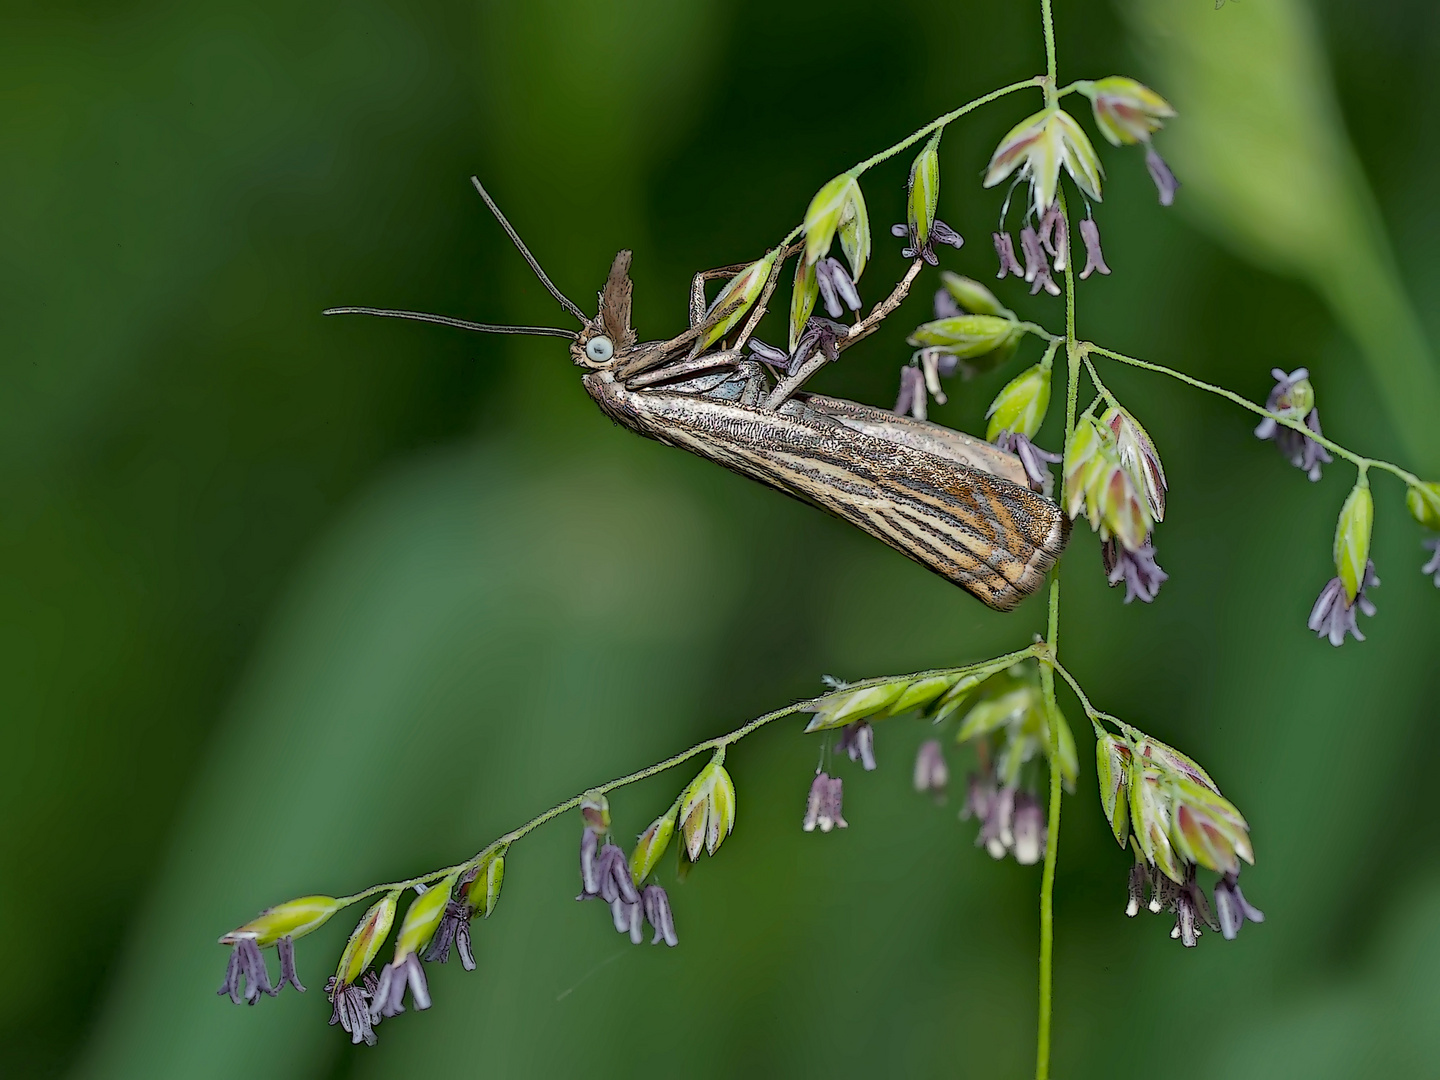 Rispengraszünsler (Chrysoteuchia culmella)